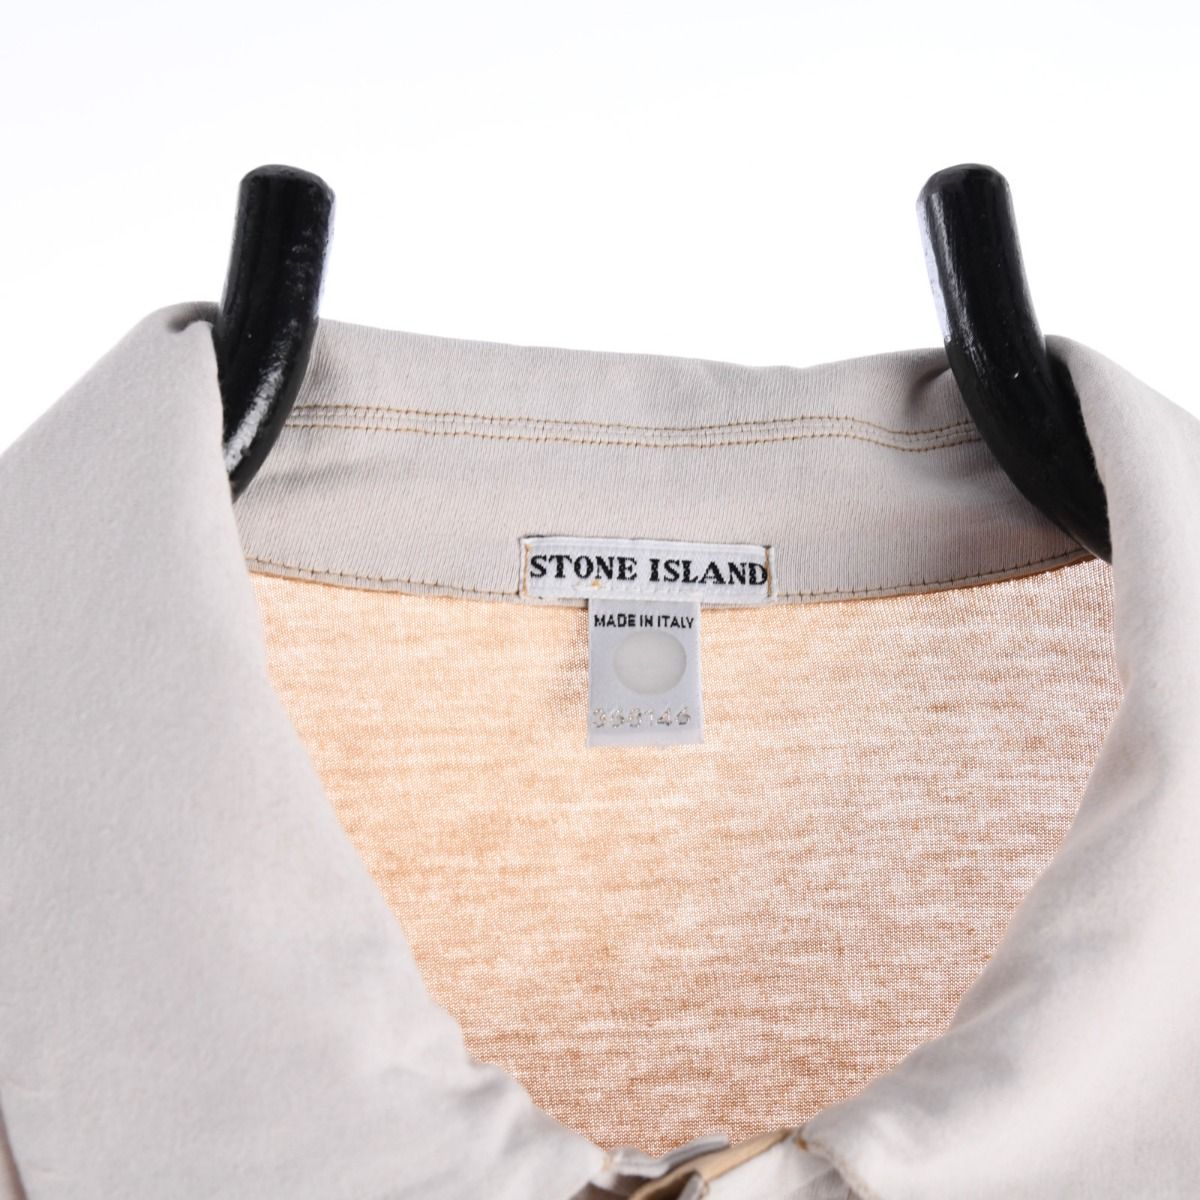 Stone Island S/S 2002 Long Sleeve Polo Shirt